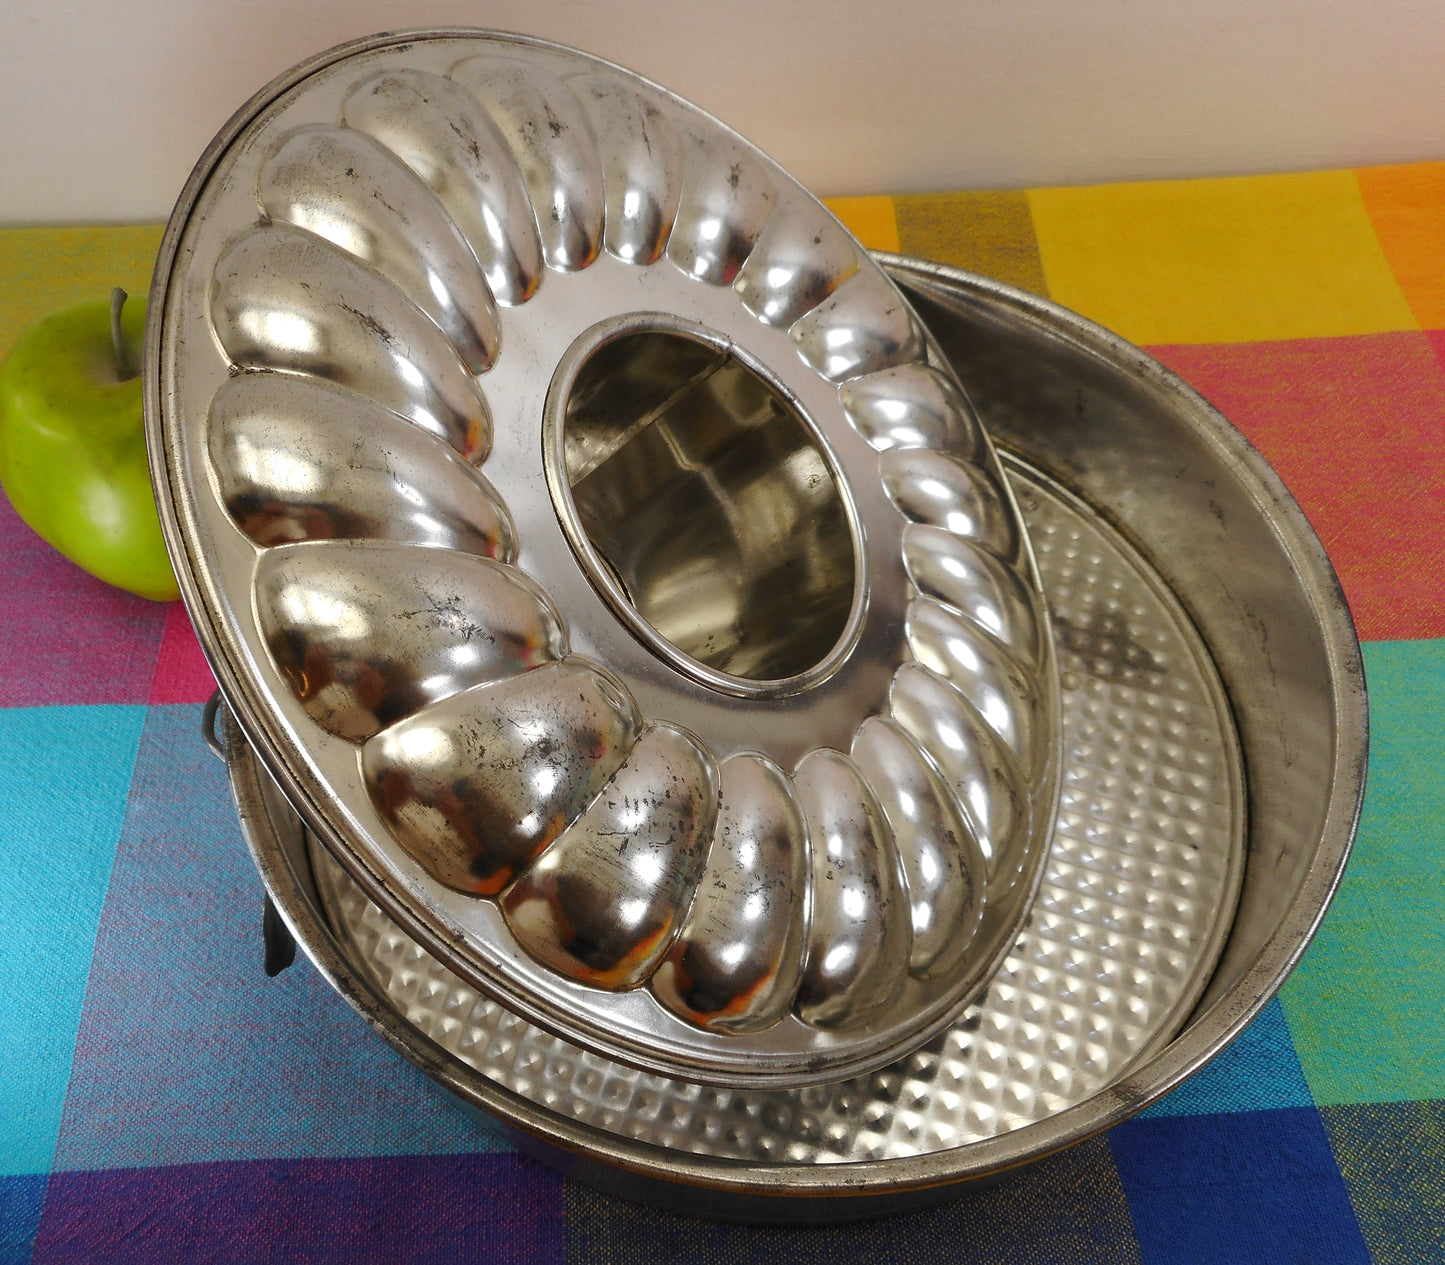 Dr Oetker Germany - 10-1/4" Combo Round Cake Bundt Removable Spring Form Pan Tin Steel